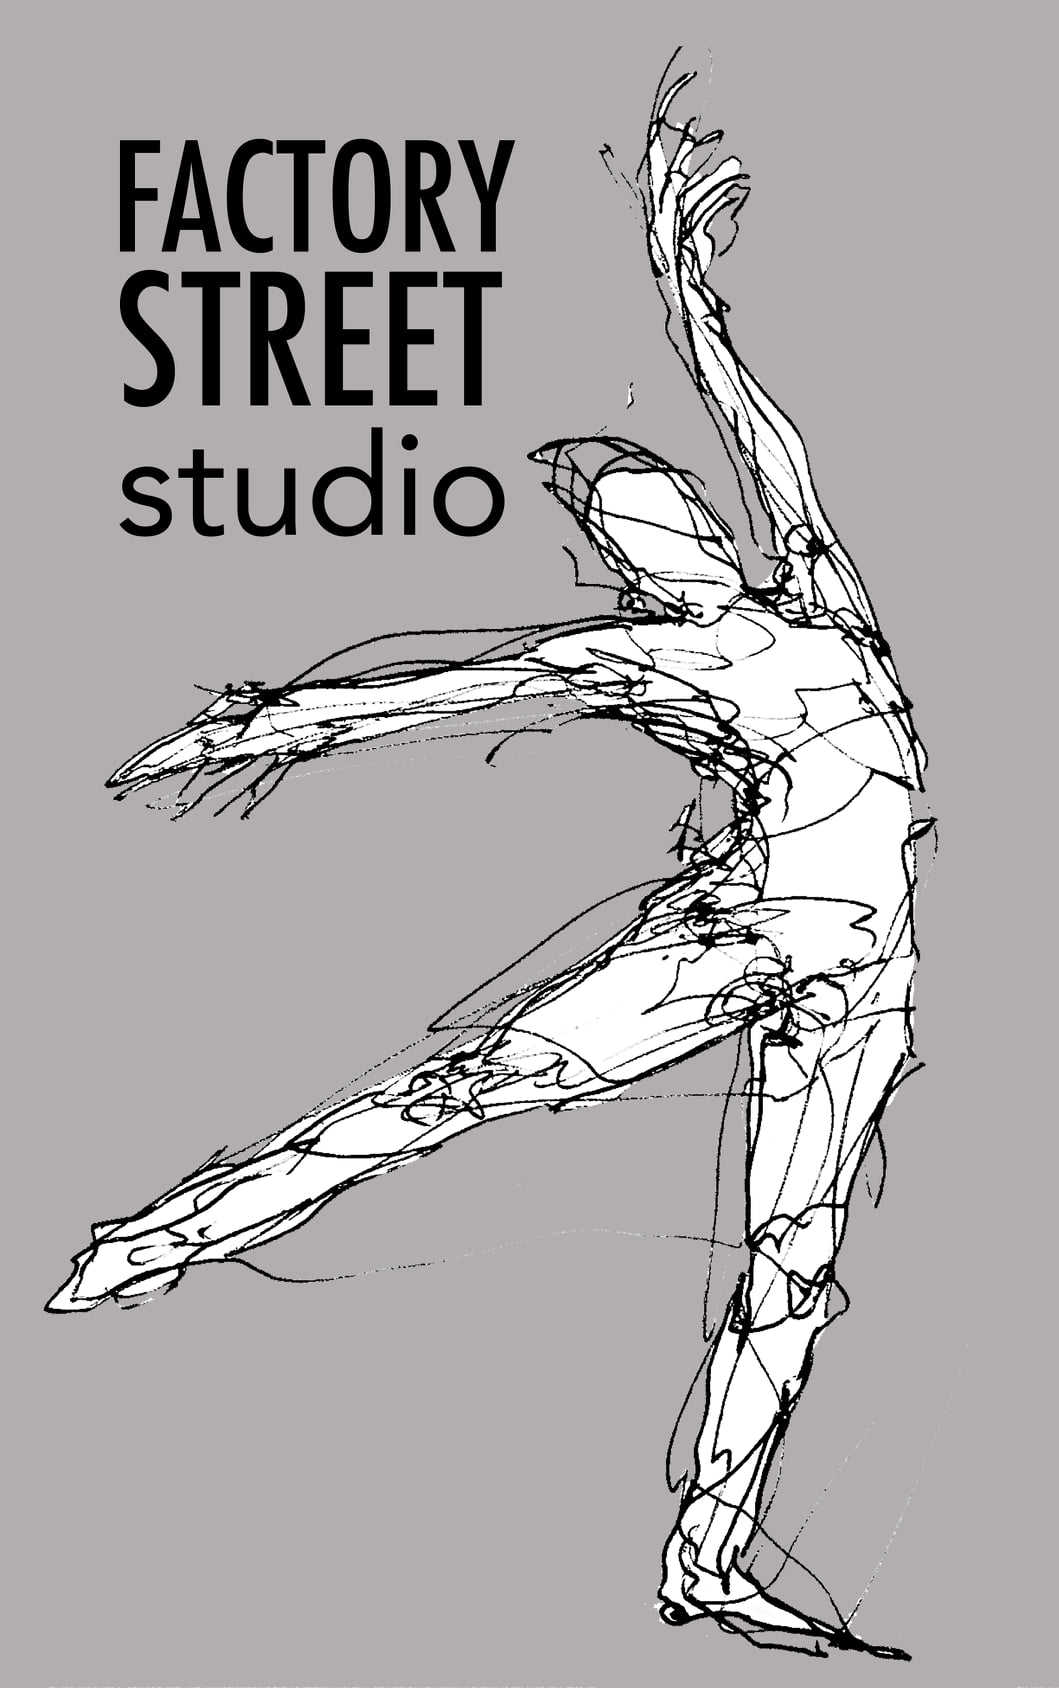 Factory Street Studio logo